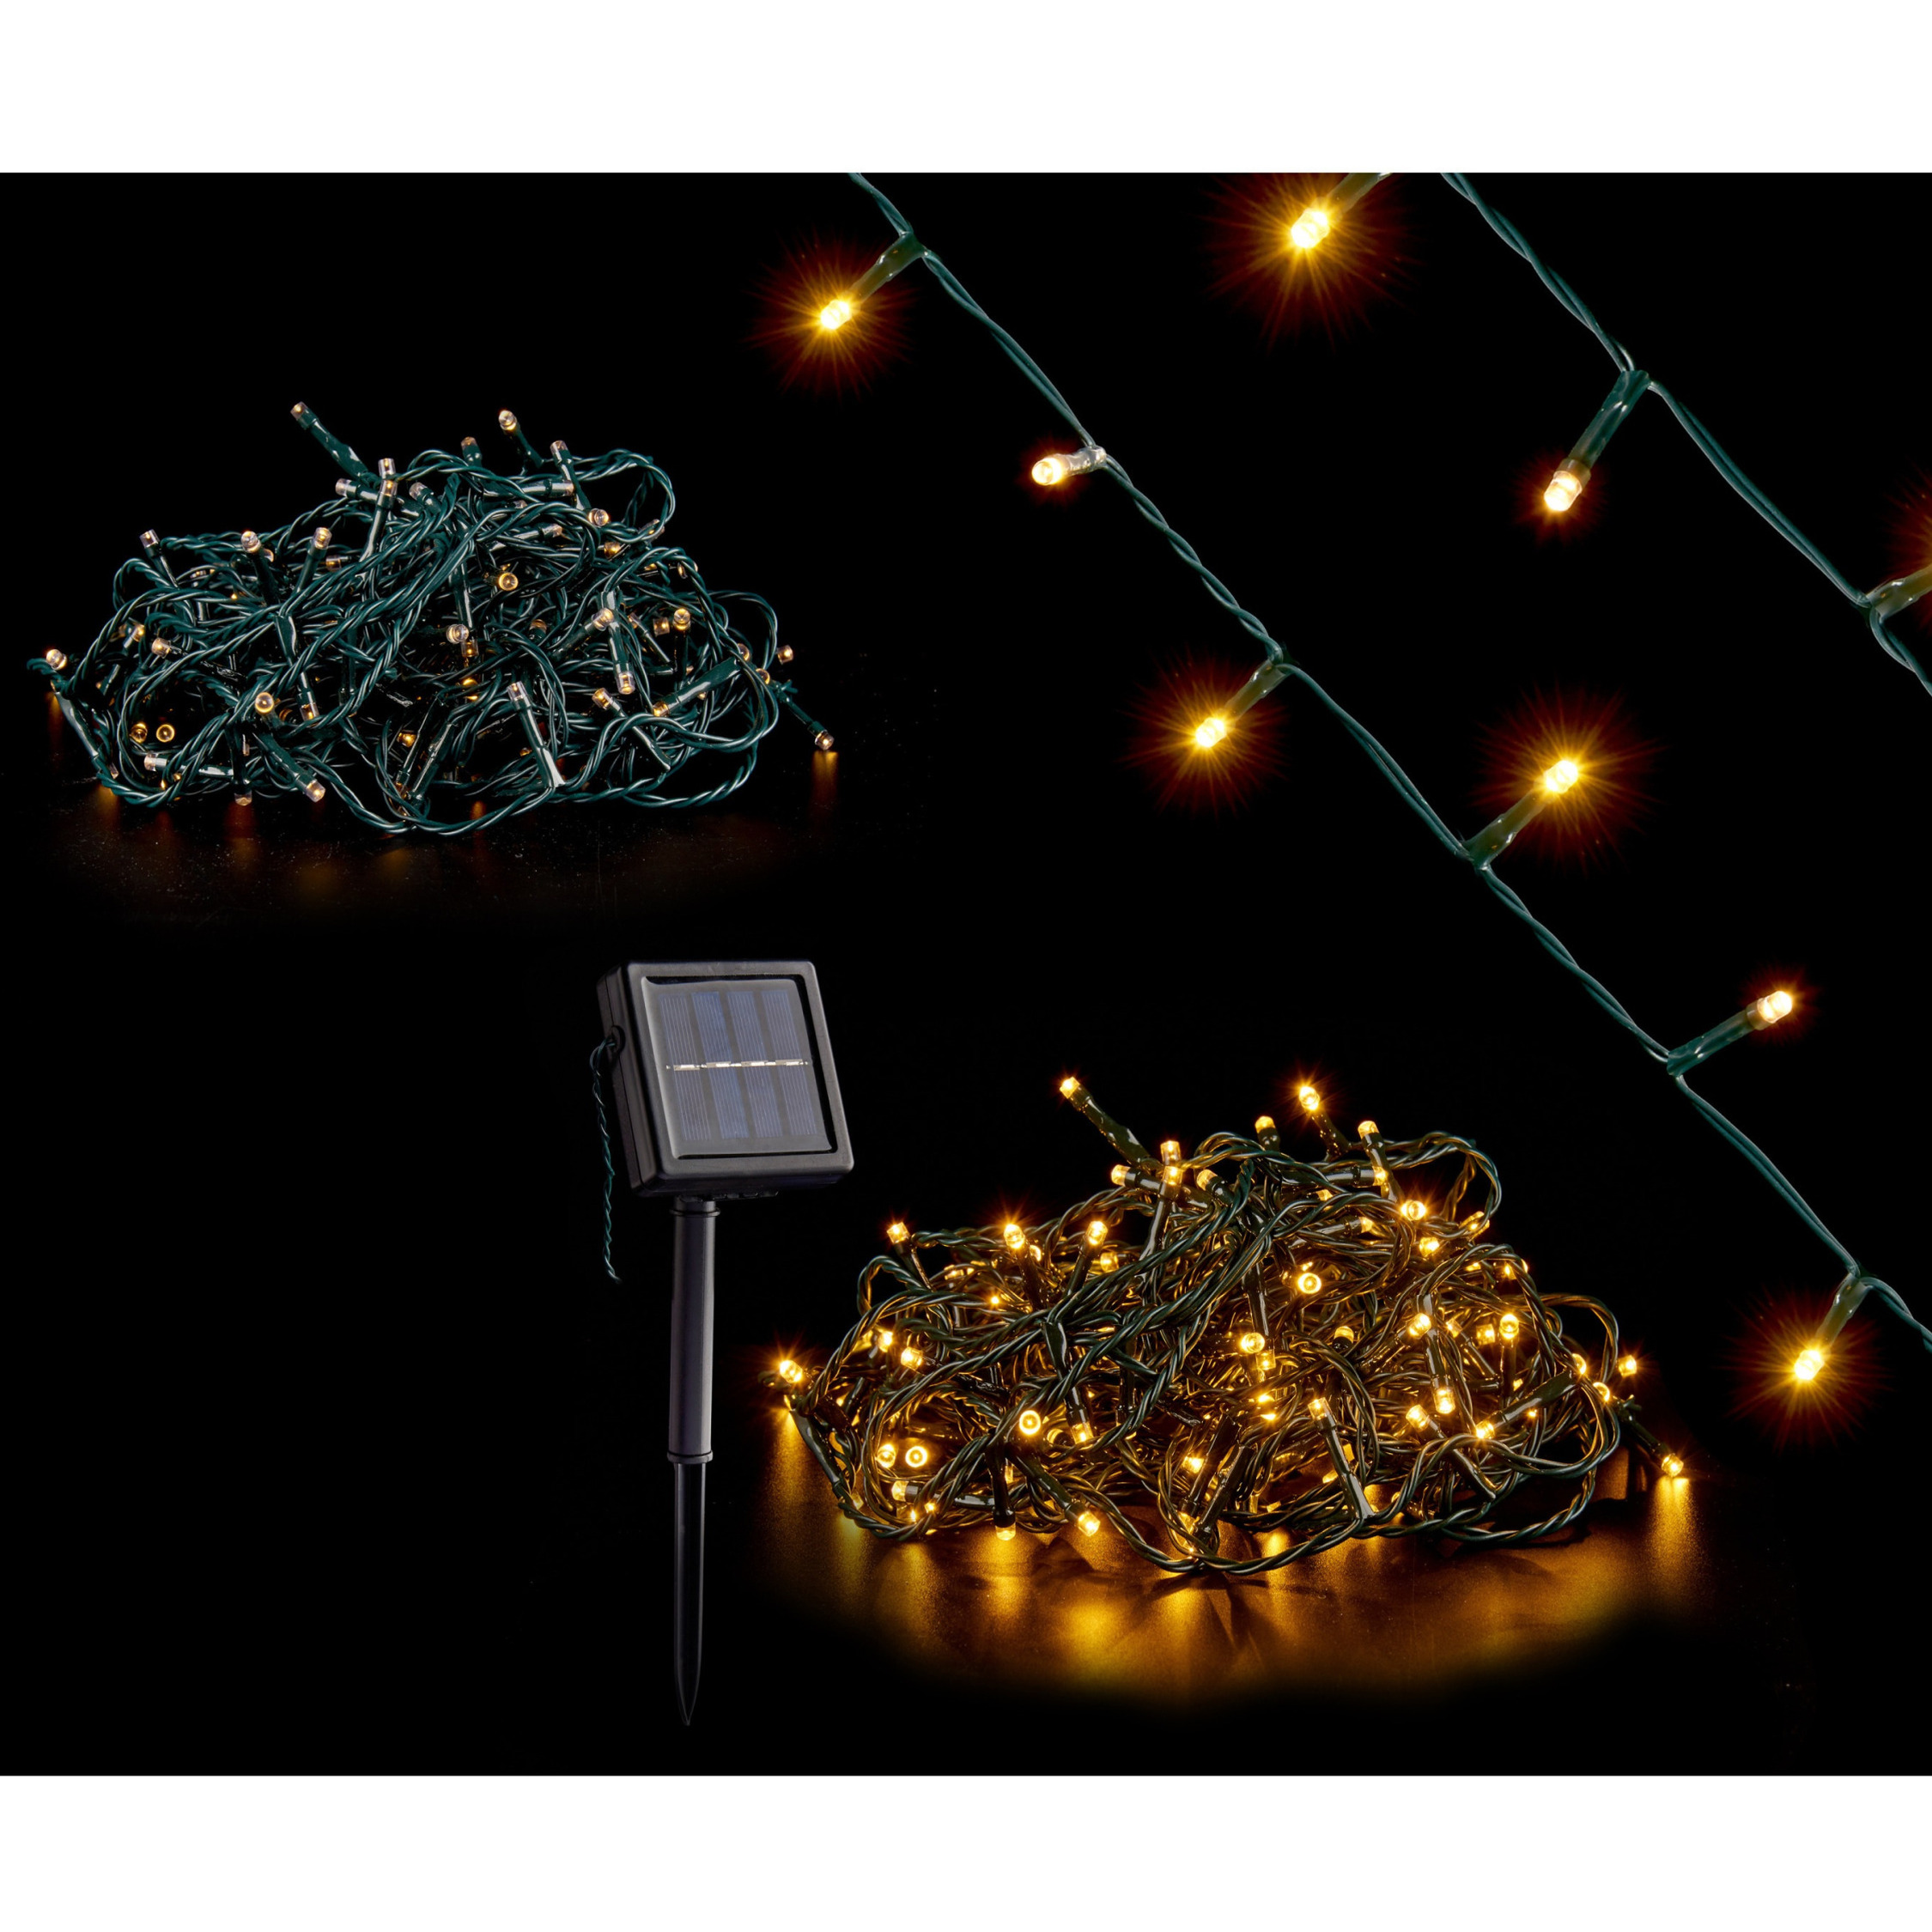 Kerstverlichting/party lights 150 warm witte LED lampjes op zonne-energie